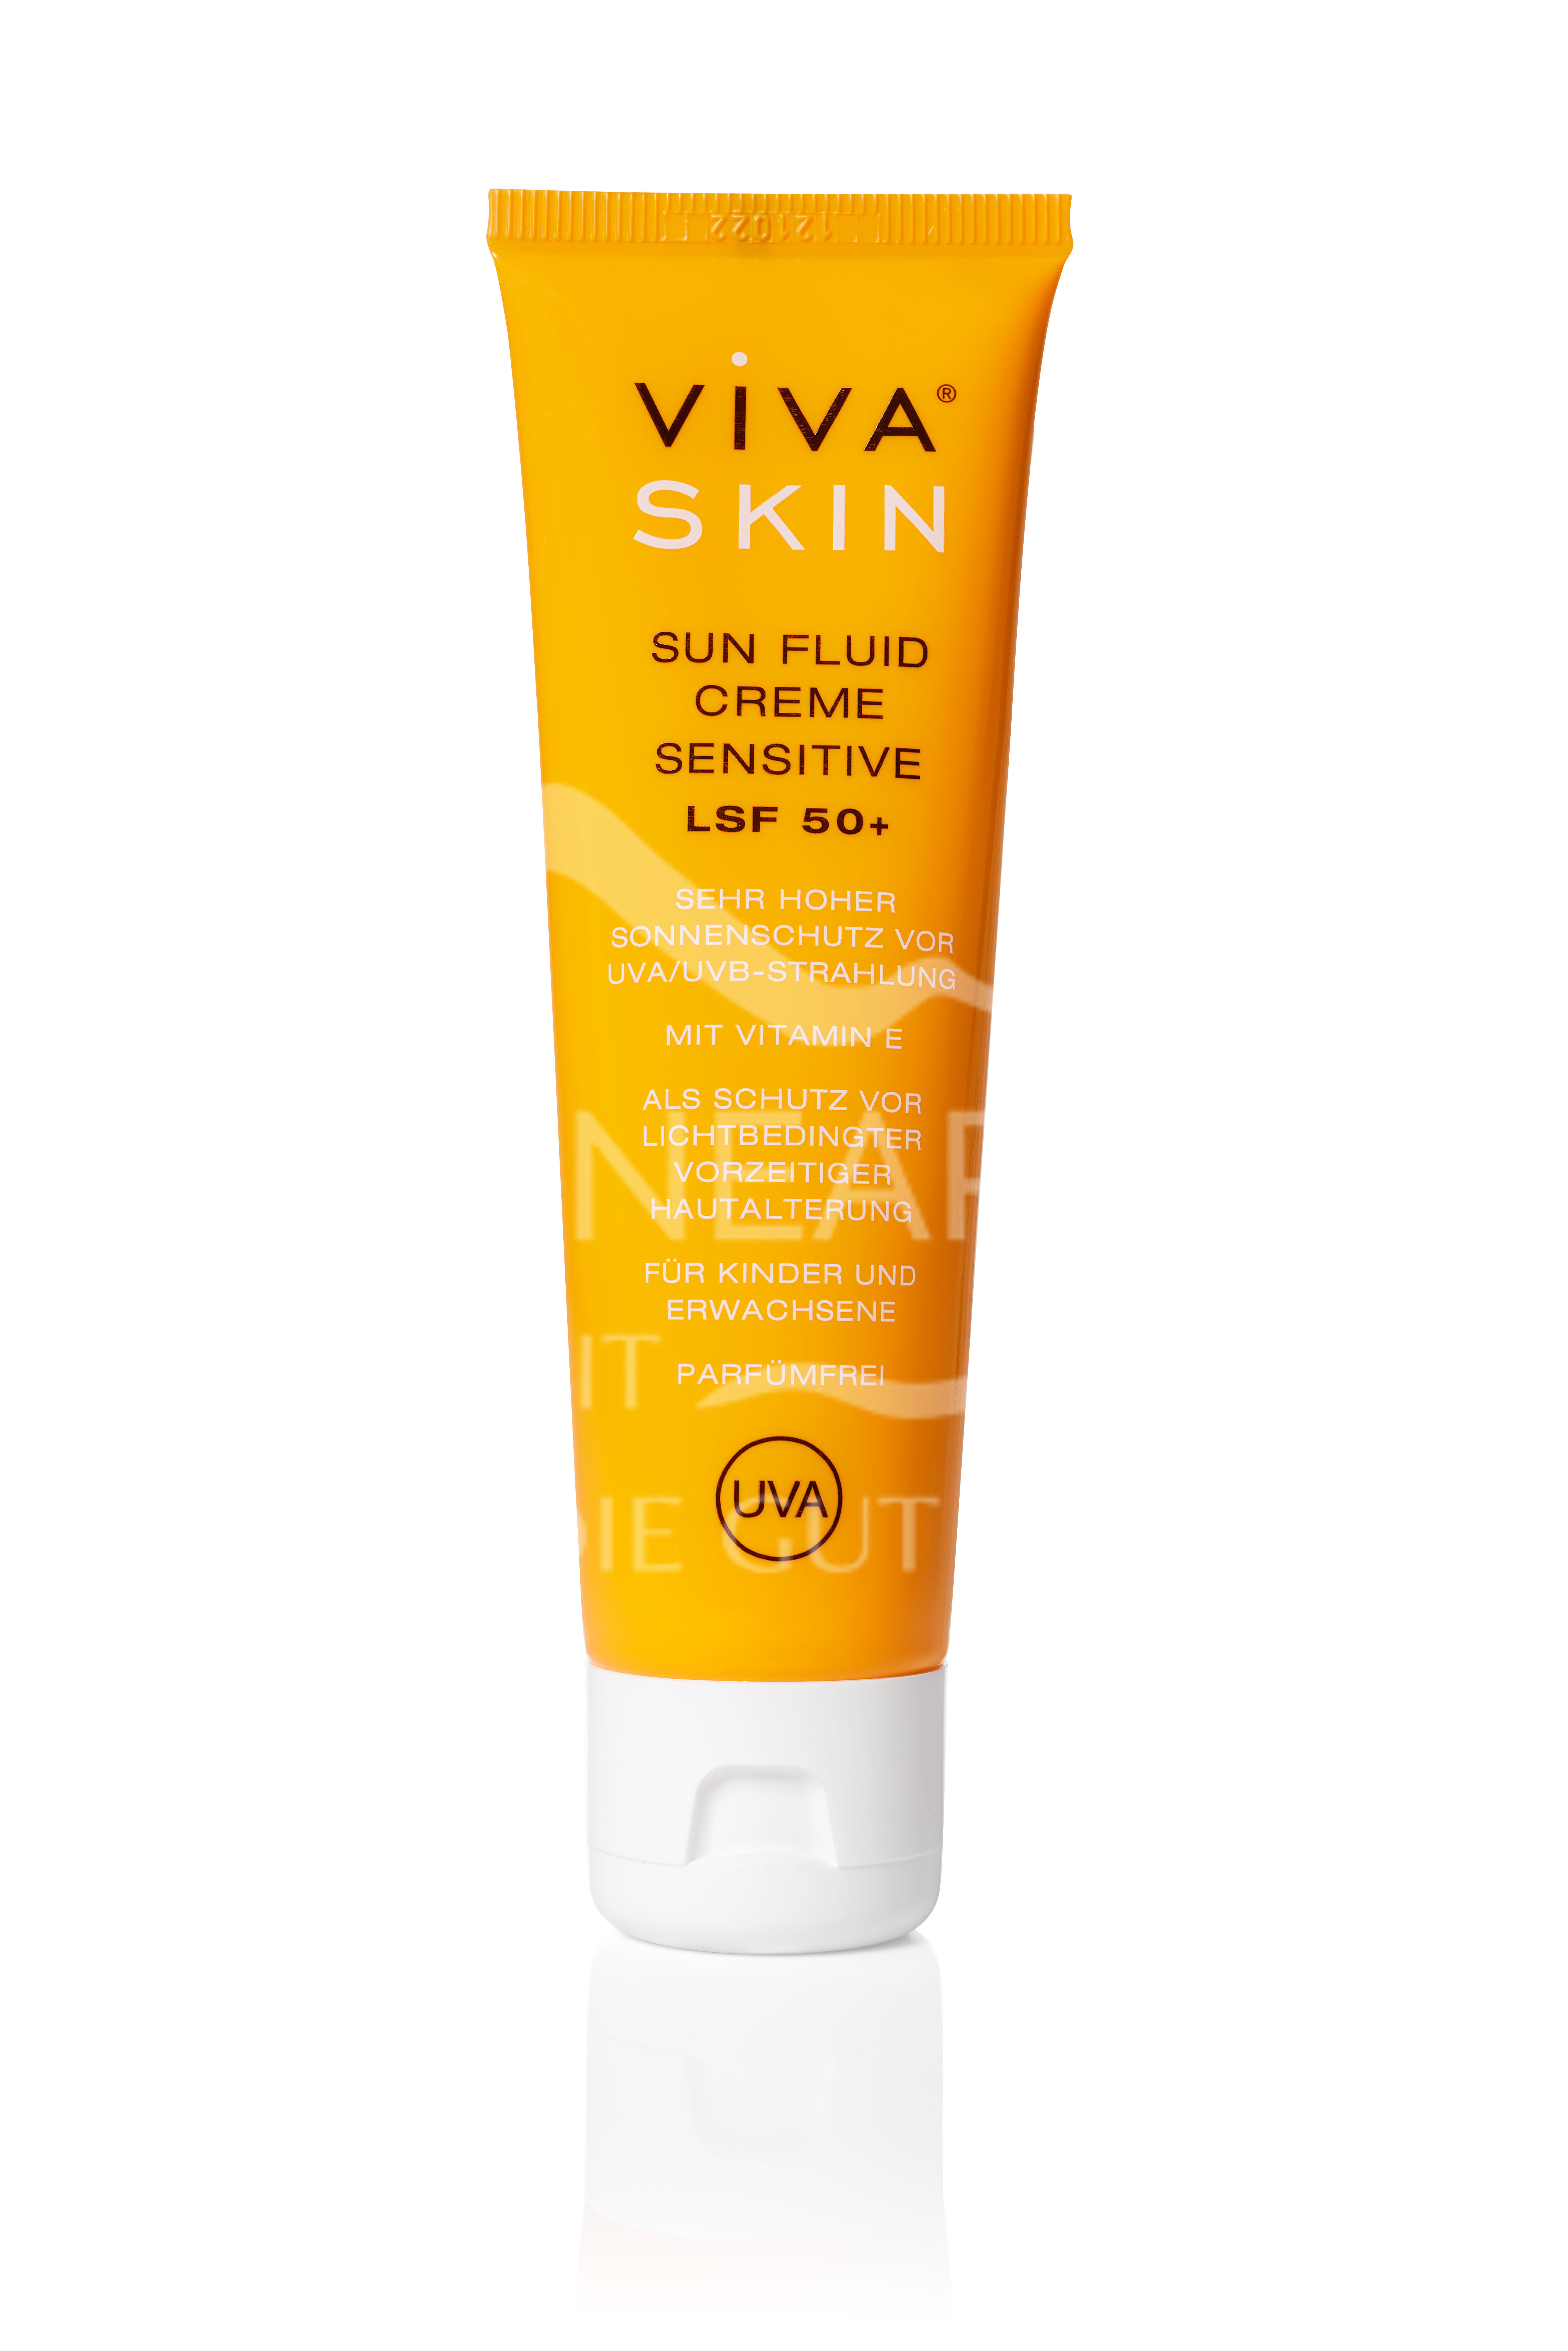 Viva Skin Sun Fluid Creme Sensitive LSF 50+ unparfümiert